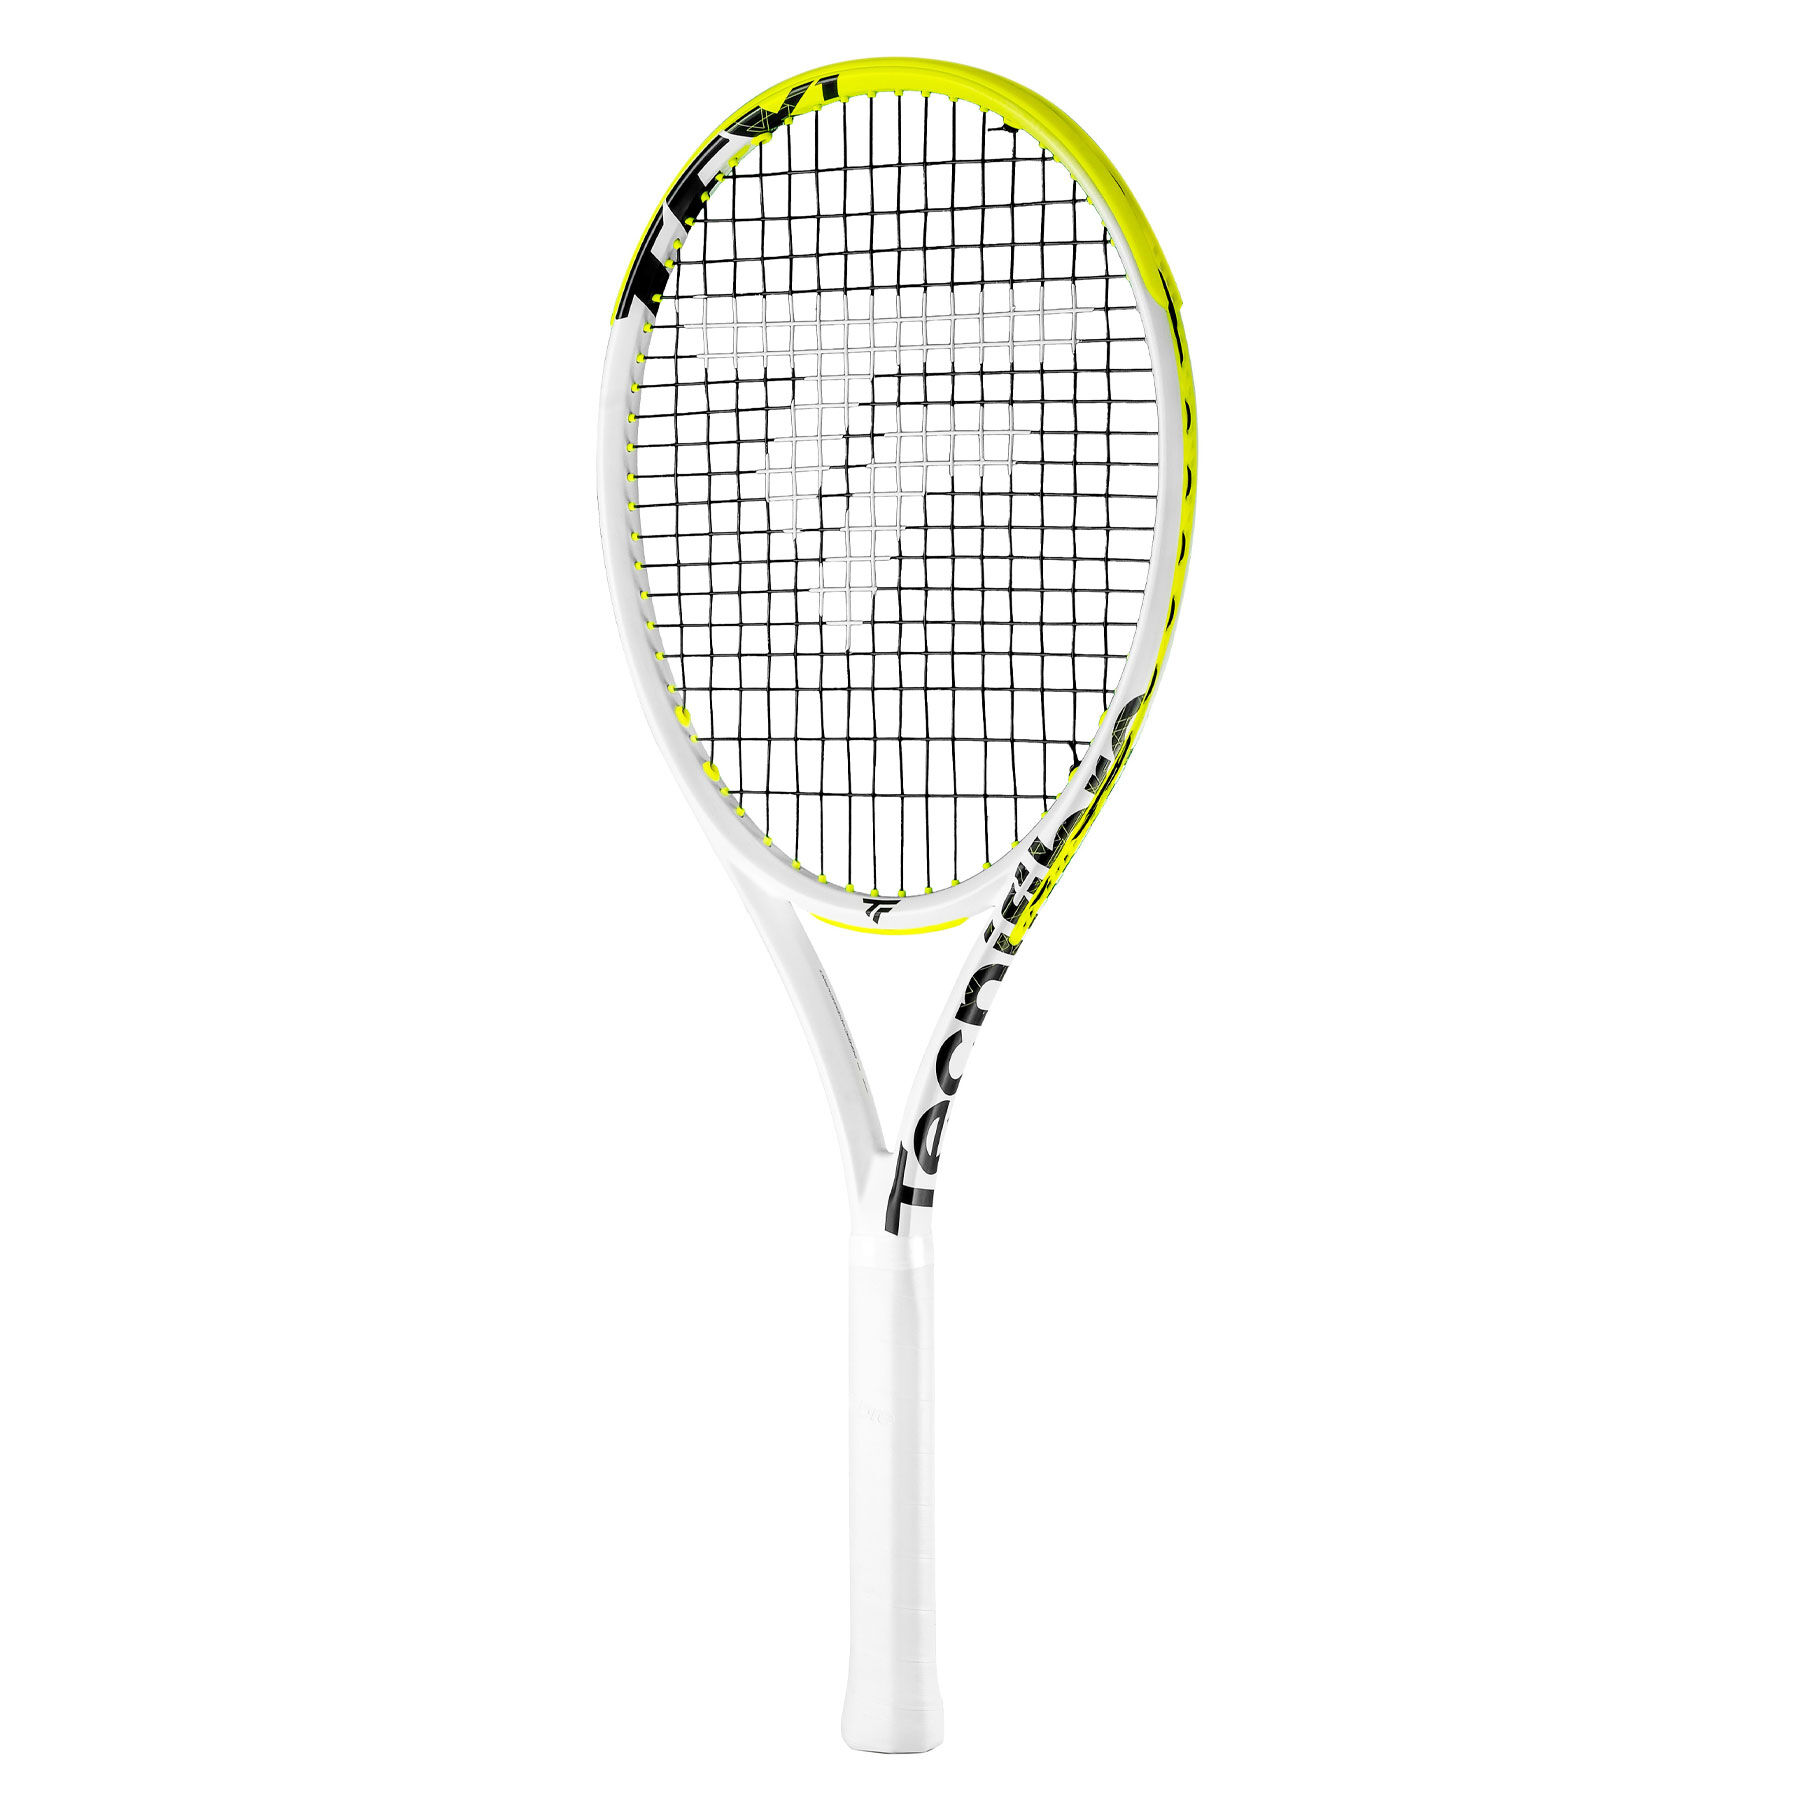 TF-X1 tennis rackets